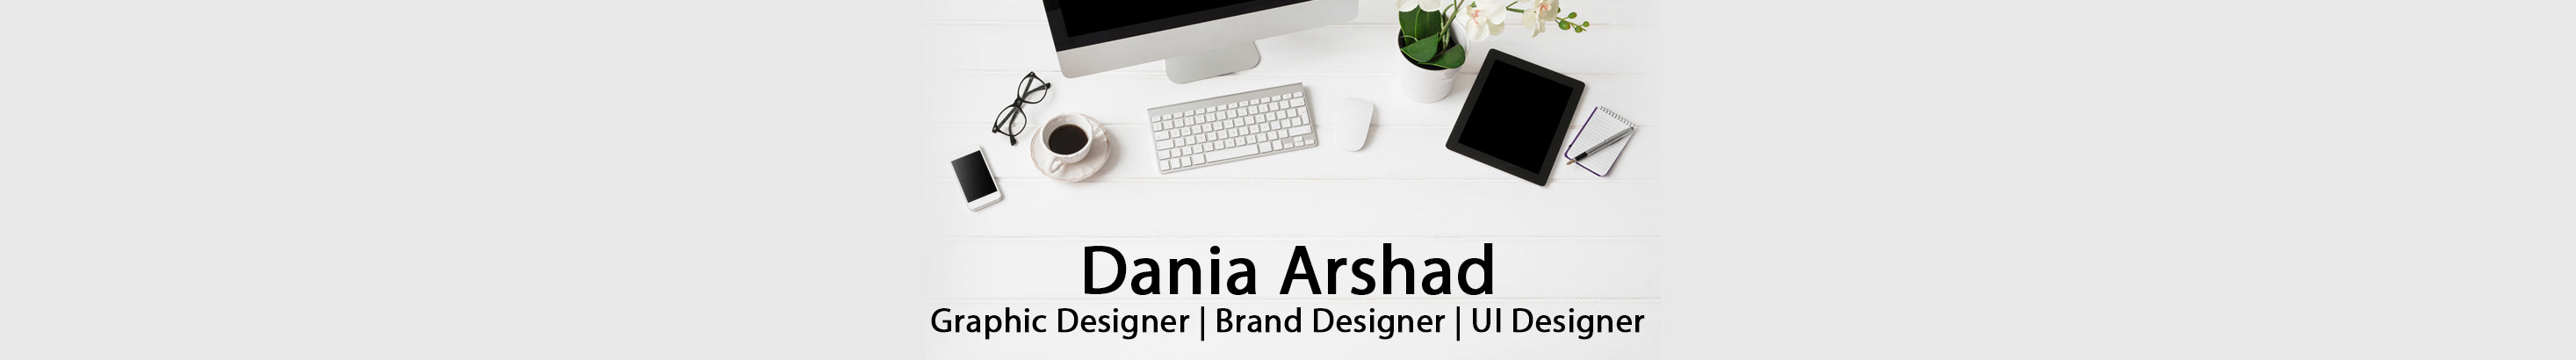 Banner de perfil de Dania Arshad